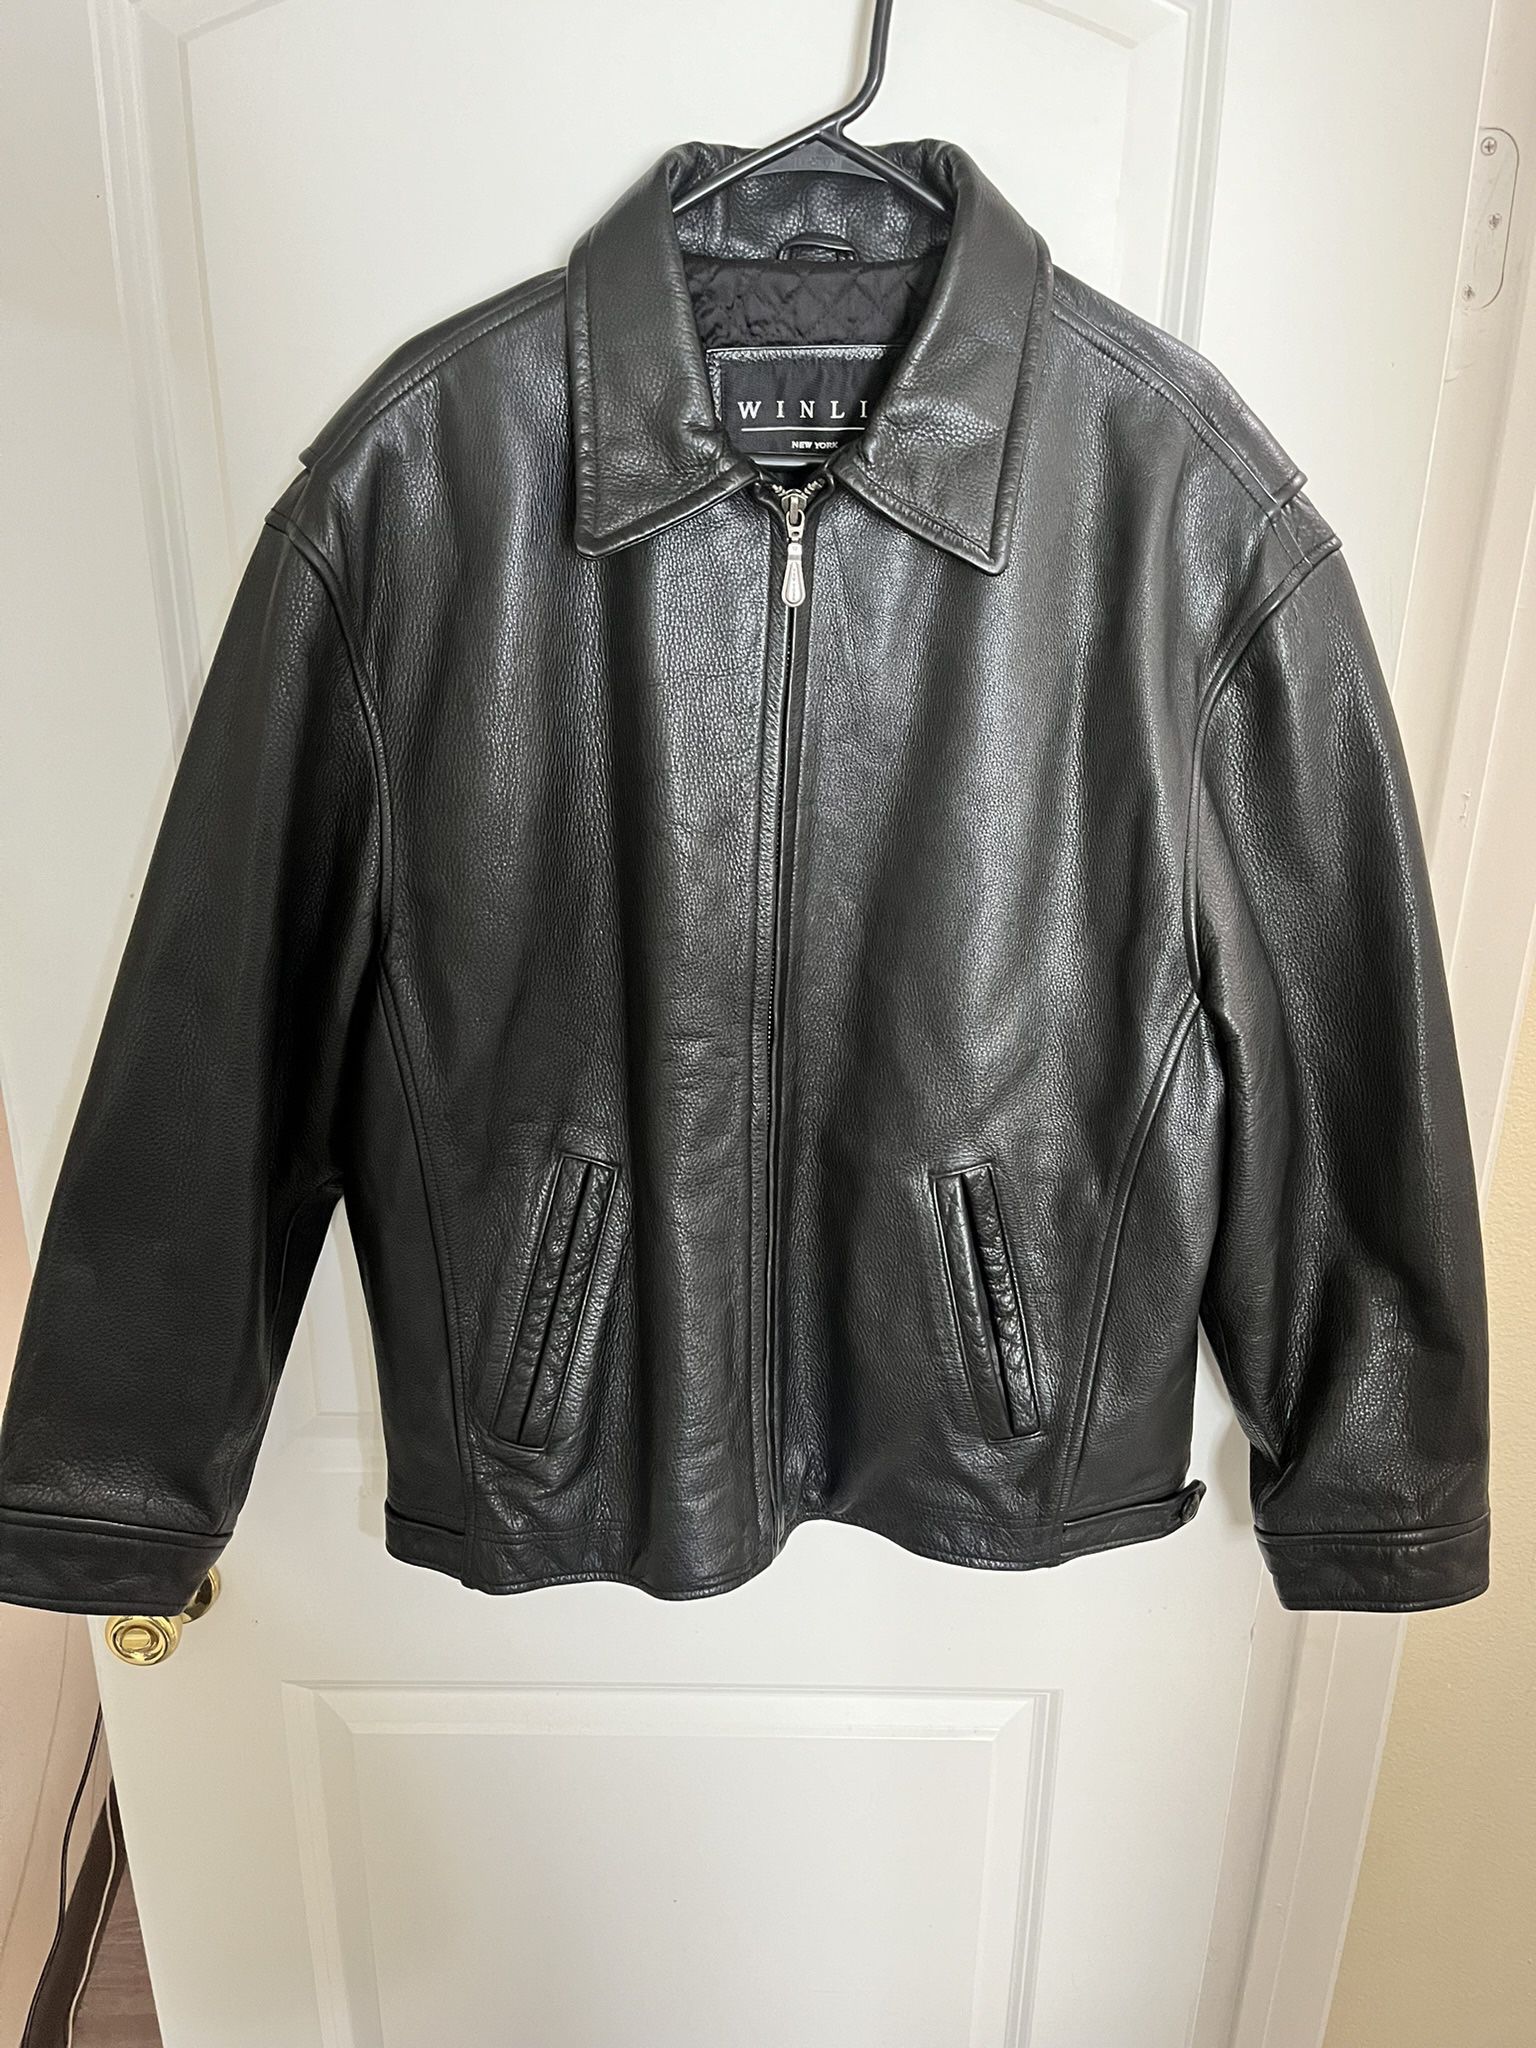 Winlit Leather Jacket